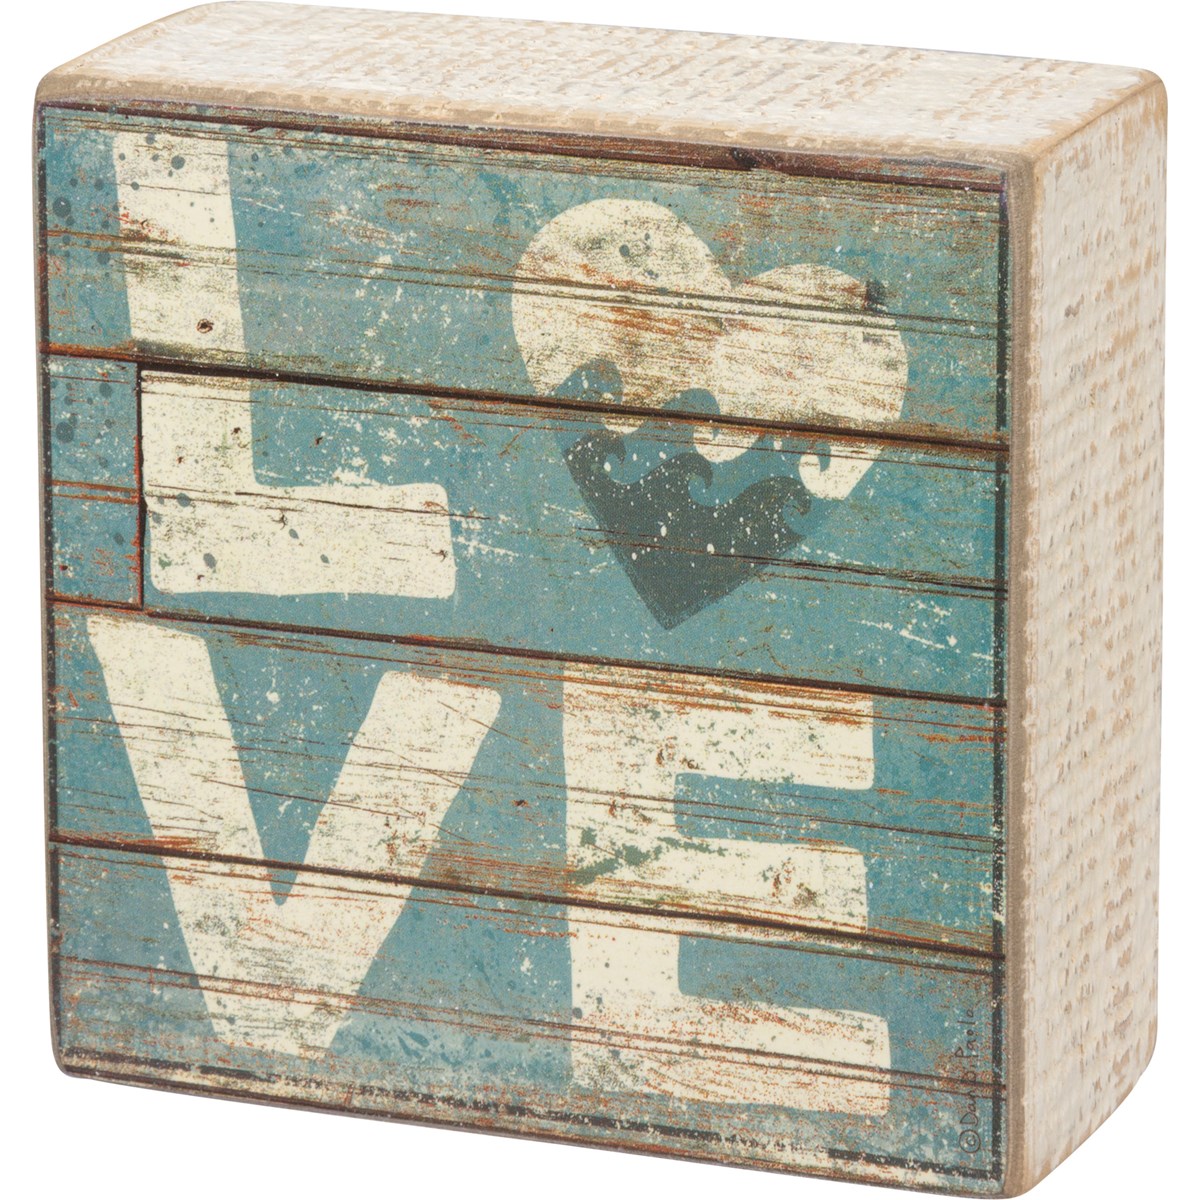 Love Beach Box Sign - Wood, Paper